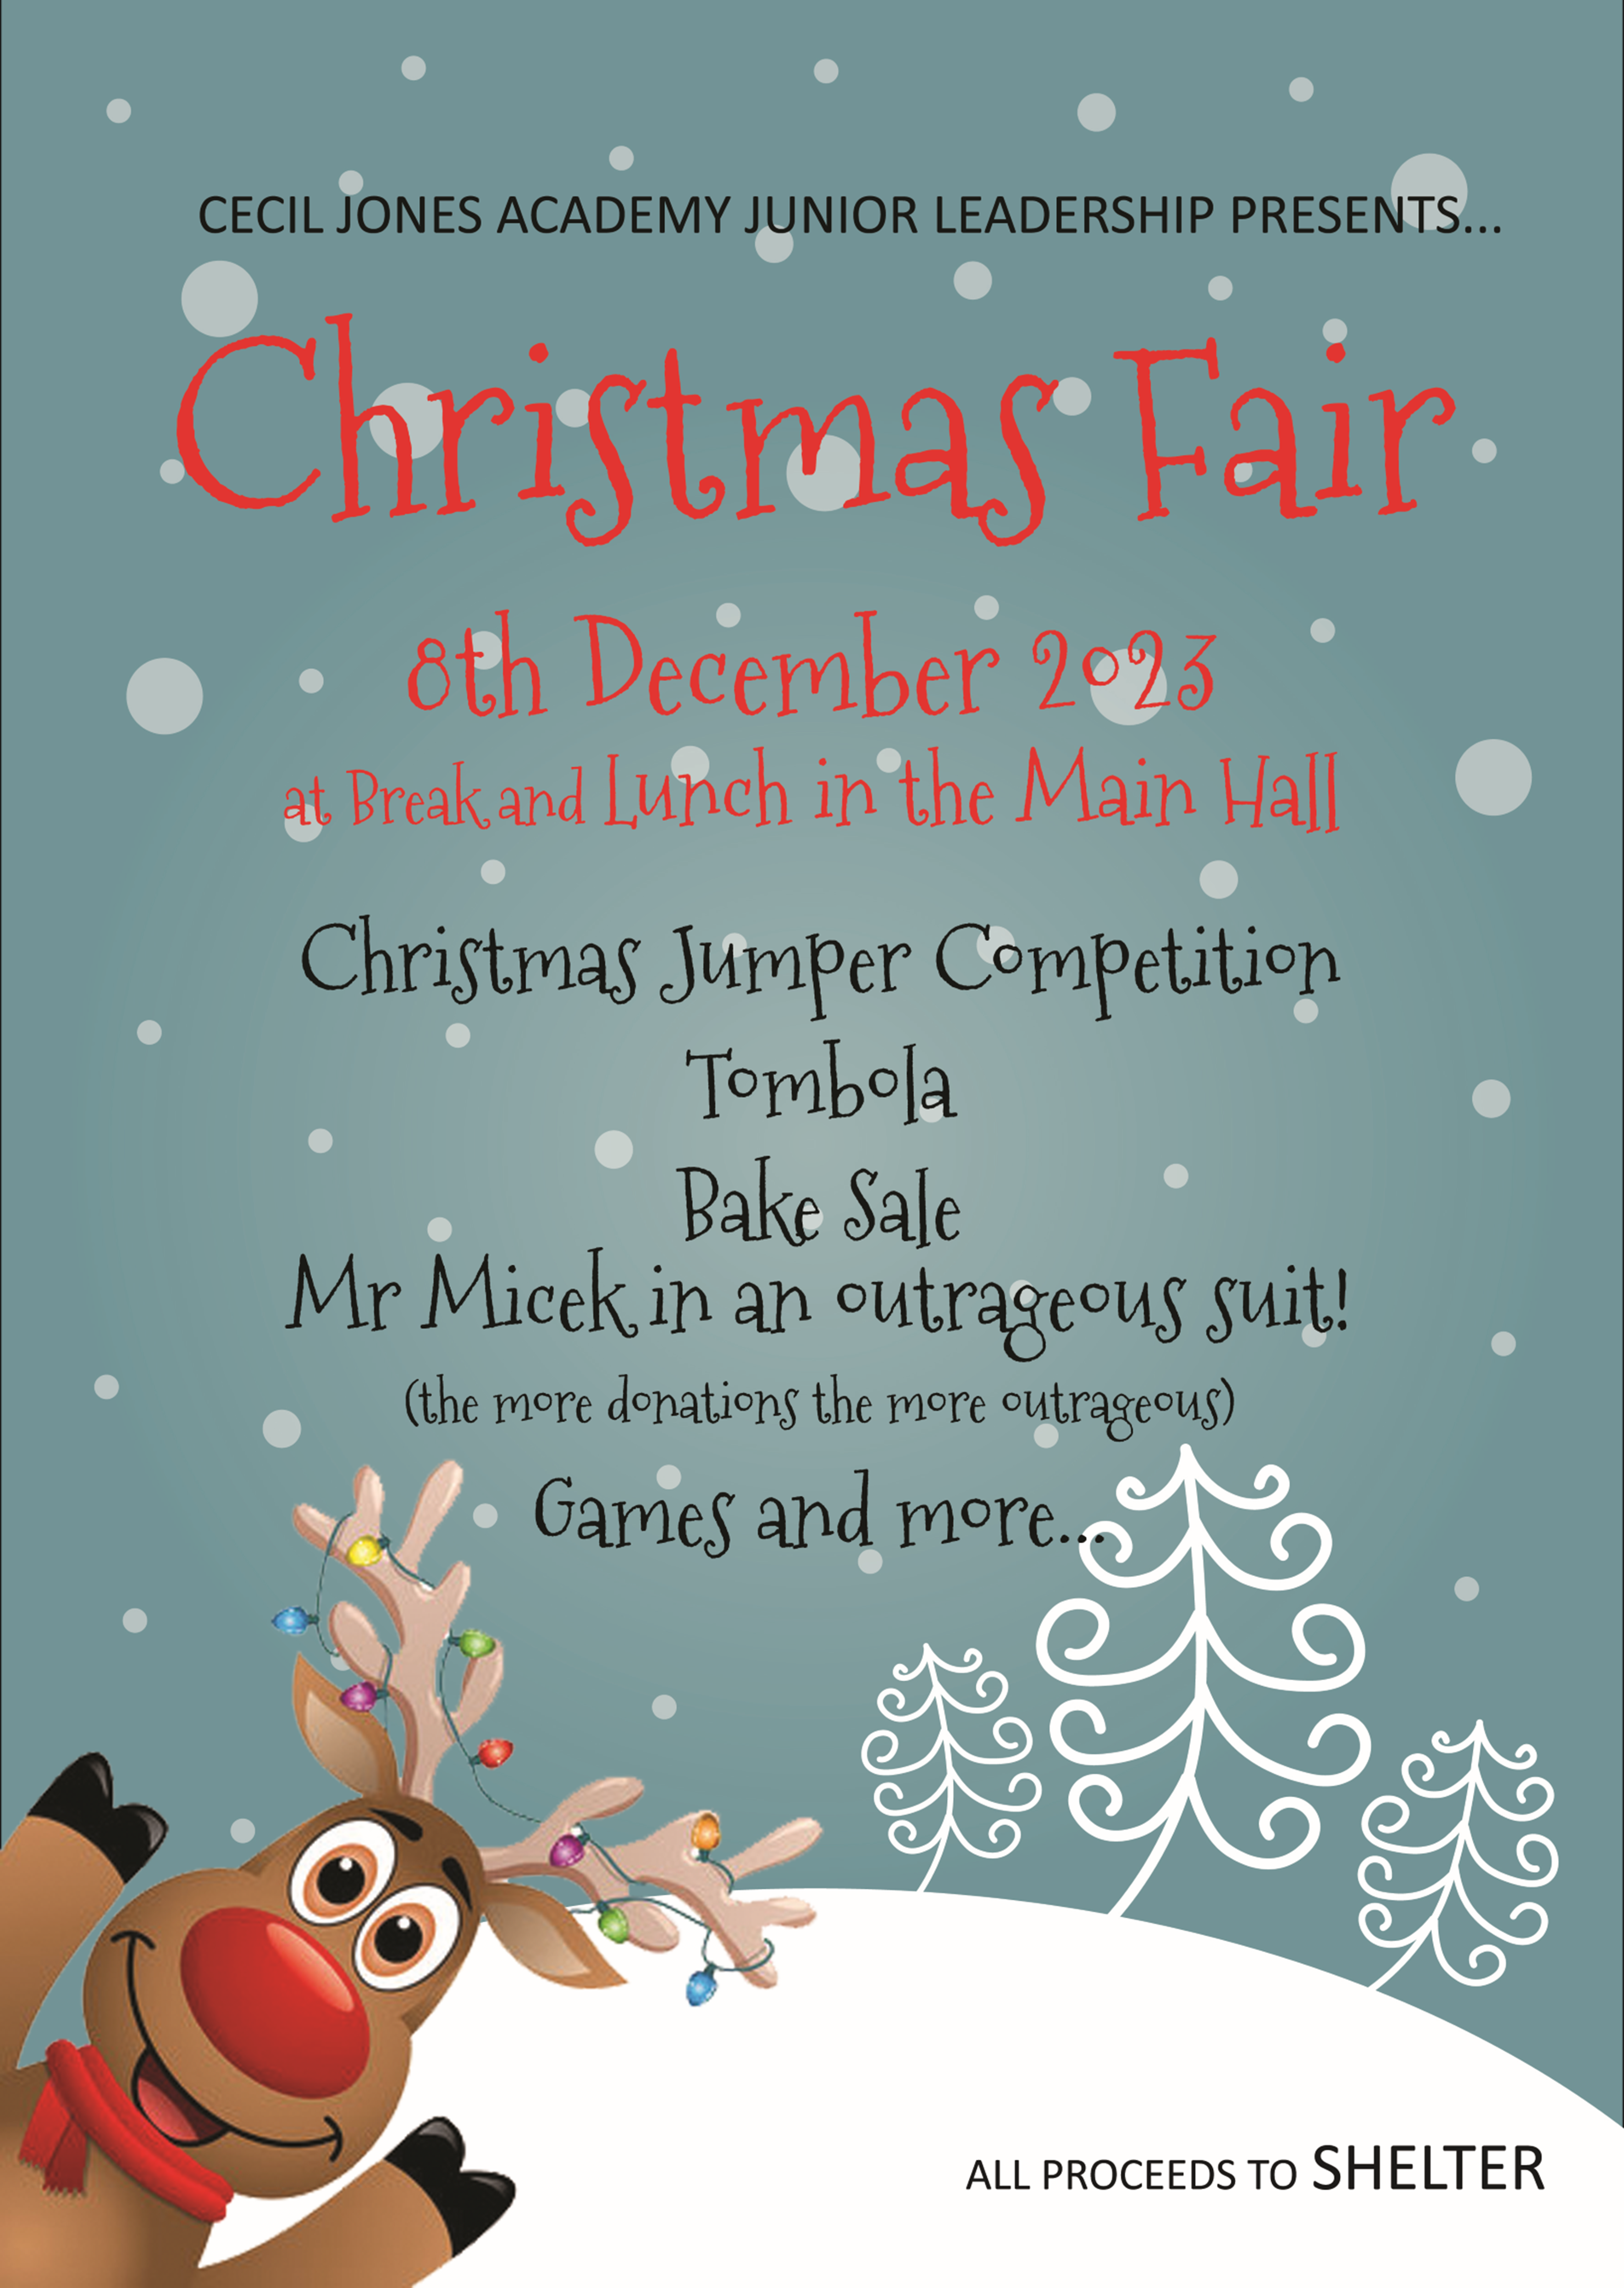 Christmas Fair Poster Dec23 1